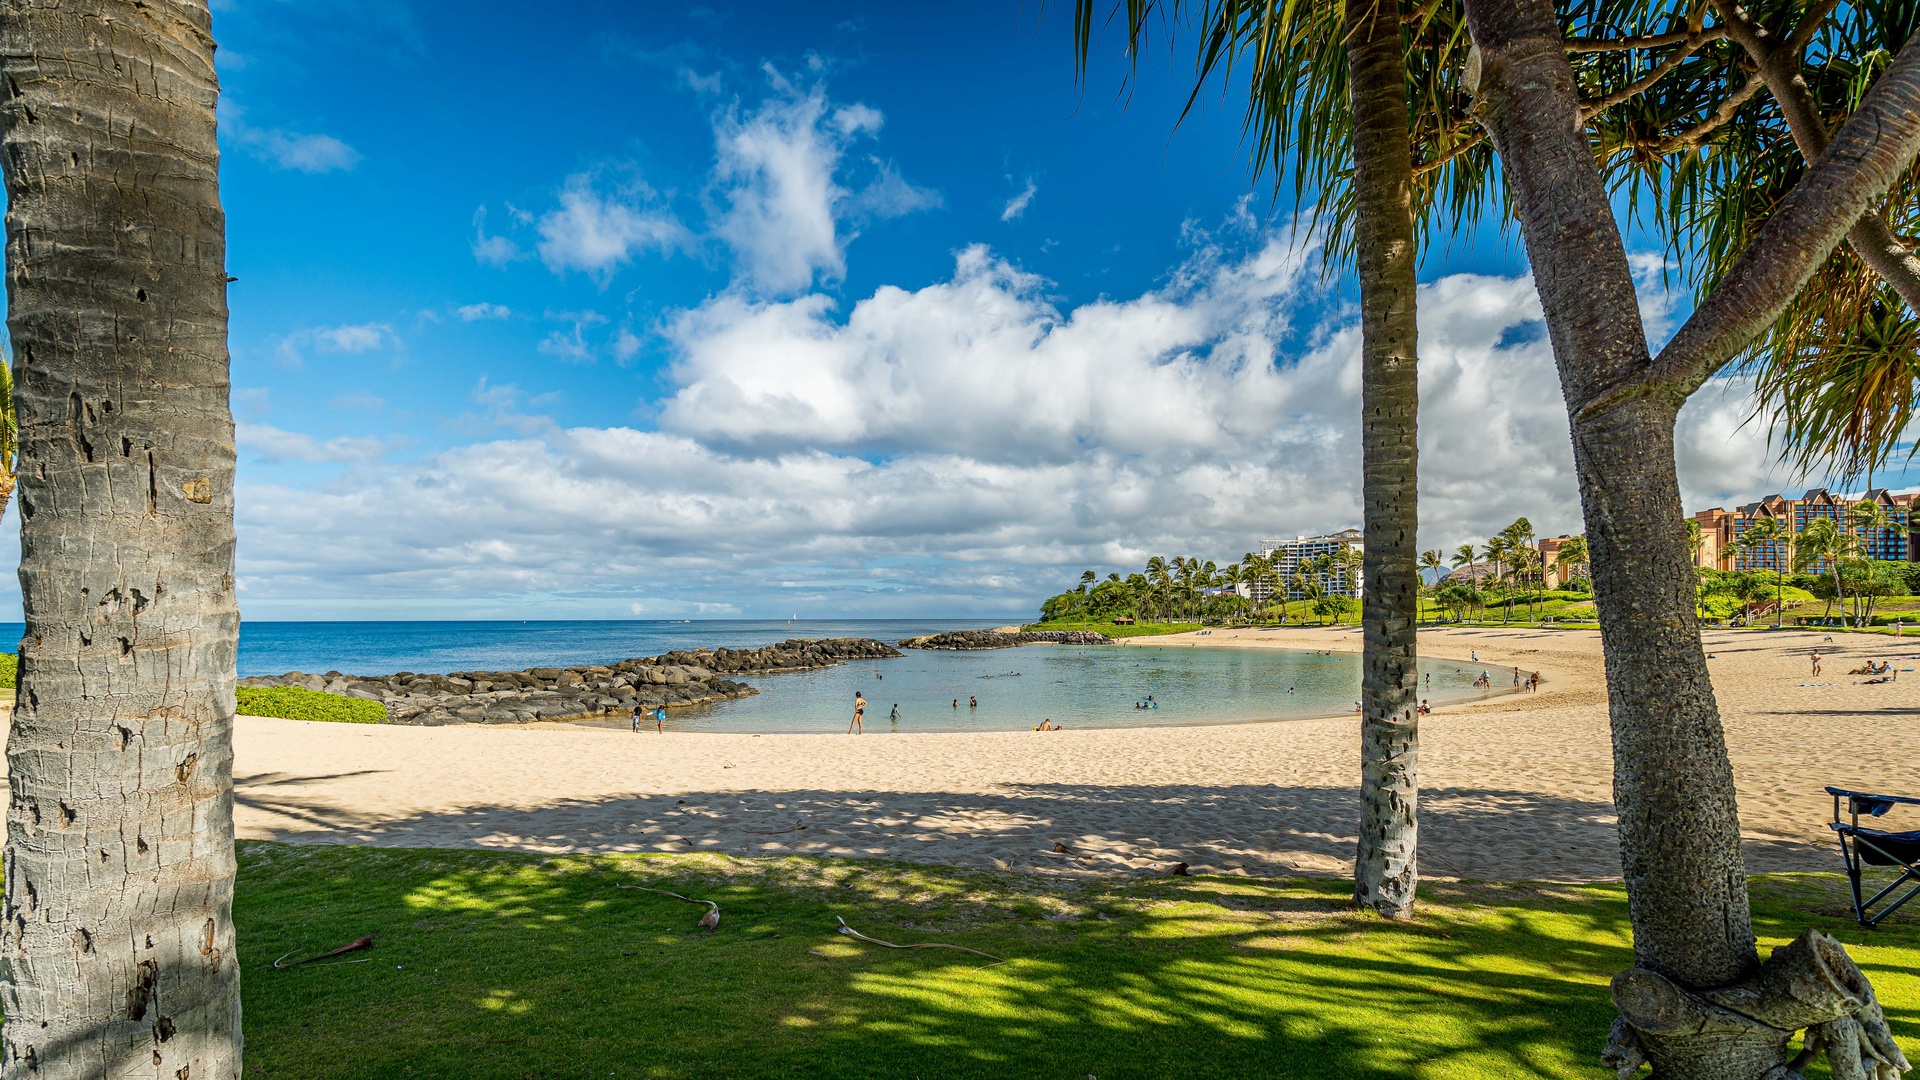 Kapolei Vacation Rentals, Fairways at Ko Olina 27H - The crystal blue lagoon and sandy beaches less than a mile away.